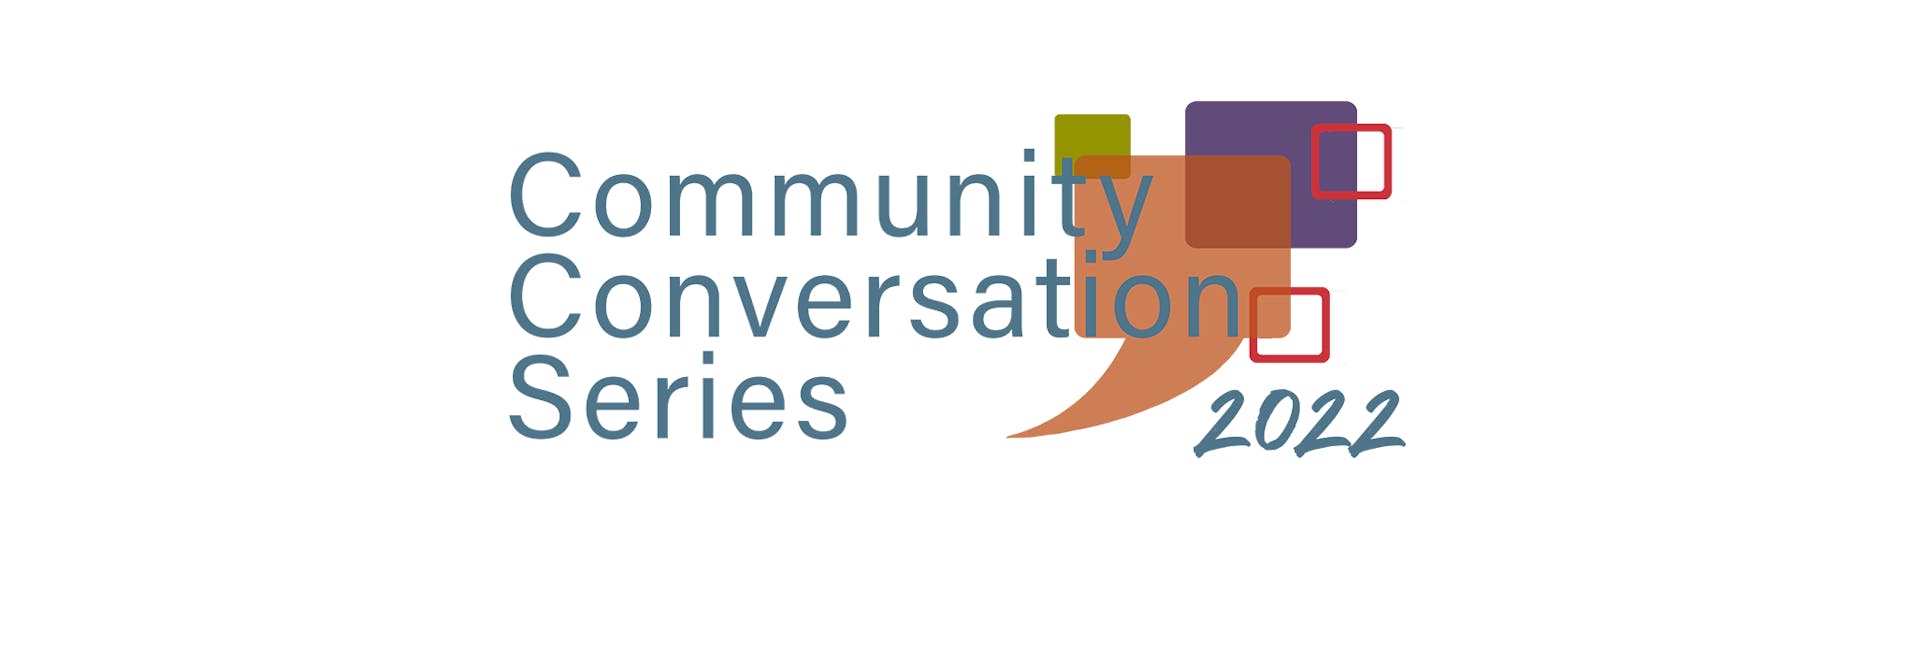 Community Conversation Series